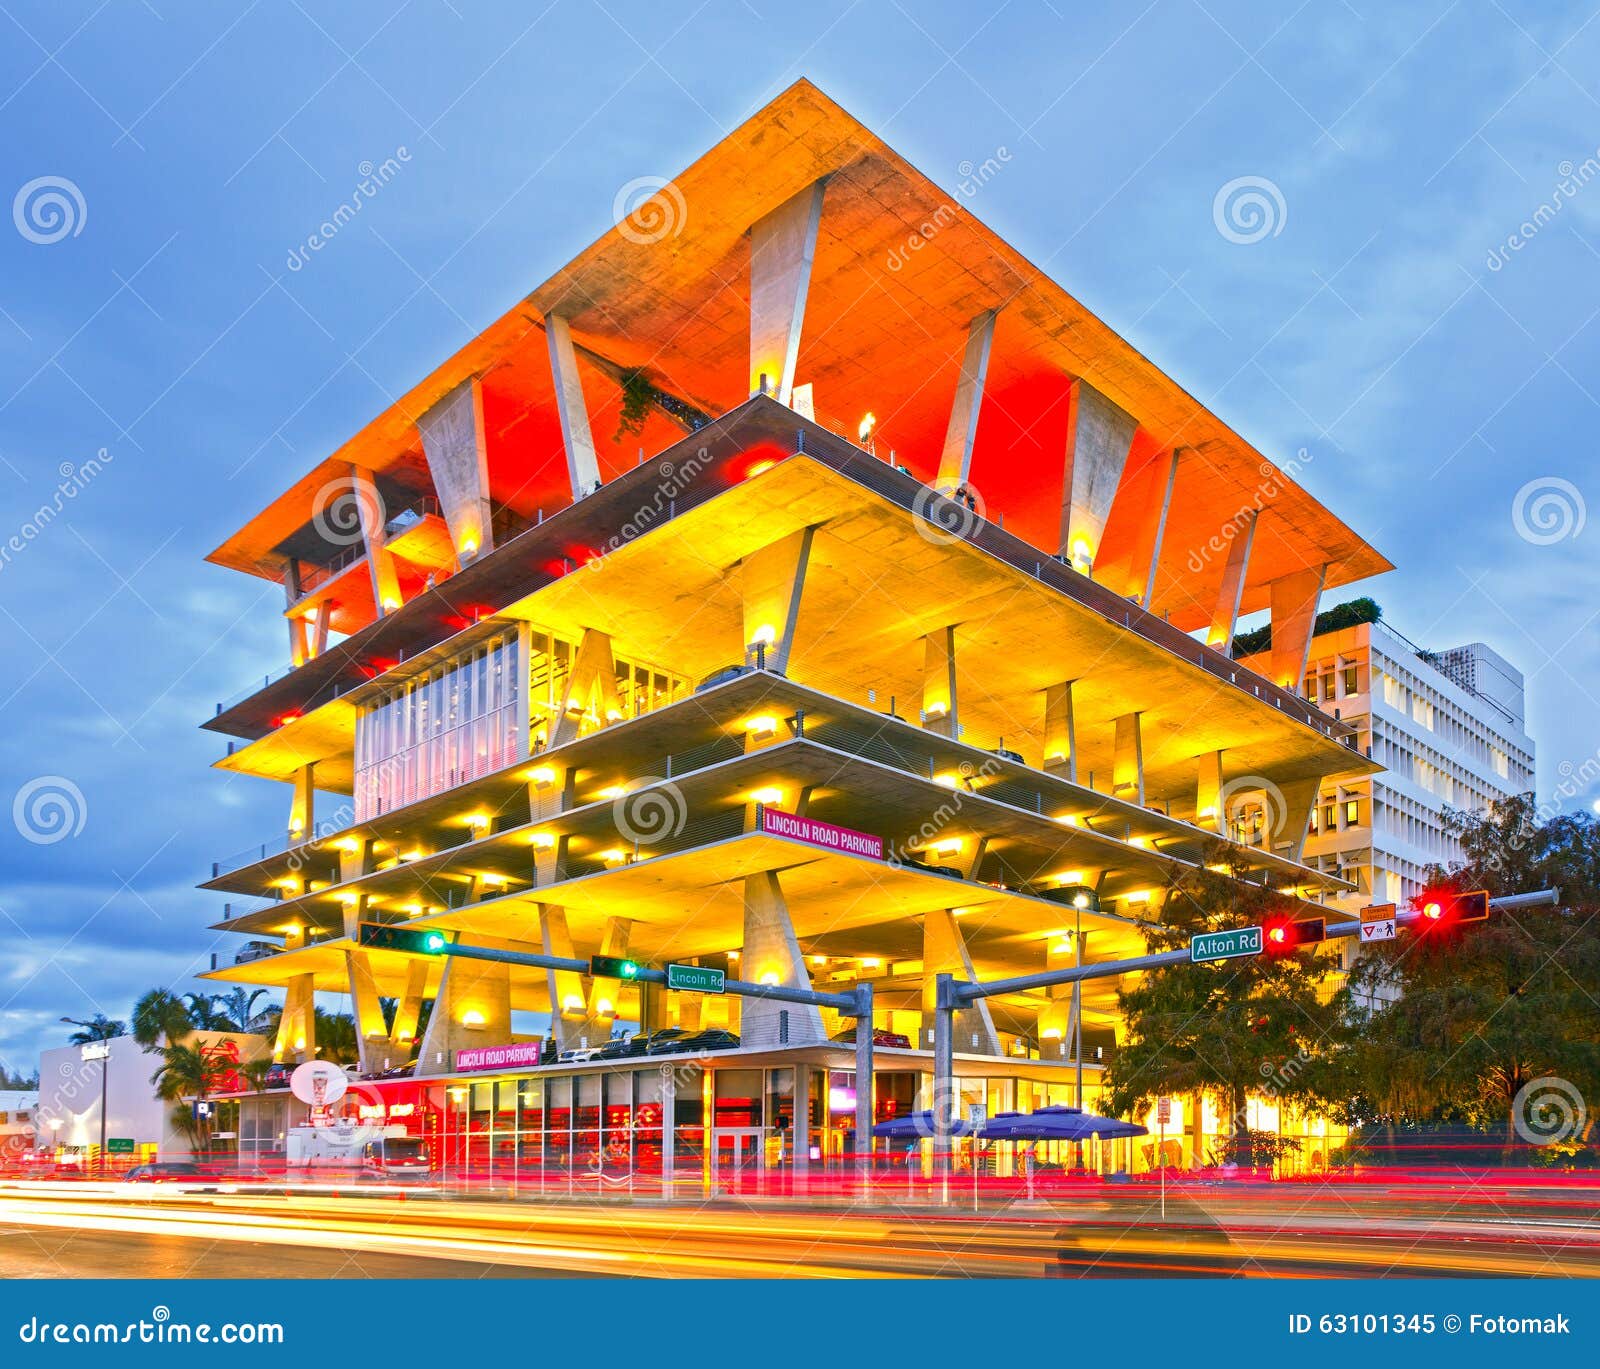 A Miami Beach Parking Lot, Designed by Herzog and de Meuron - The